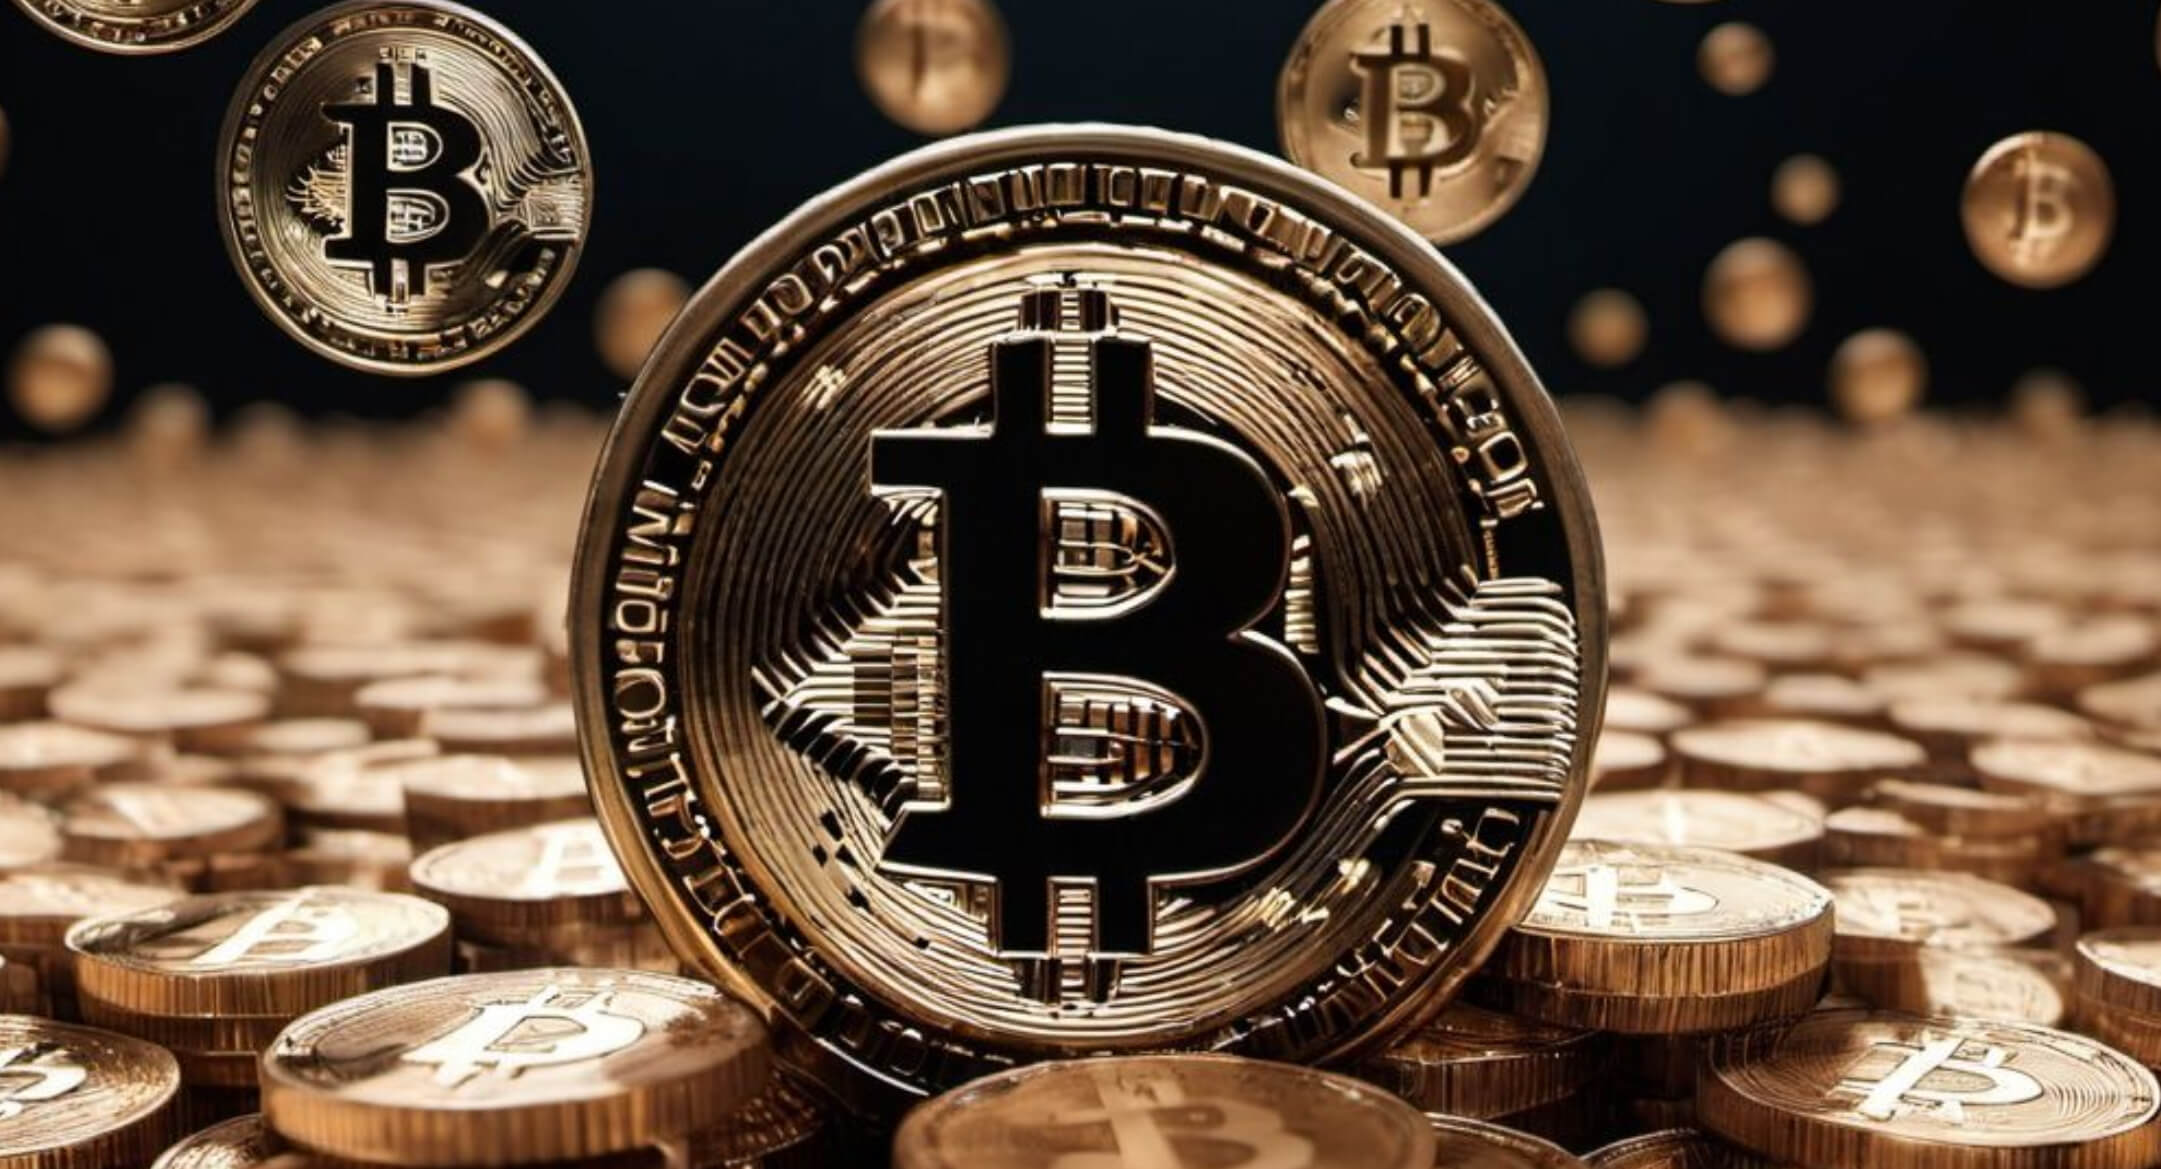 Comprehensive Analysis of Bitcoin's Current Market Dynamics